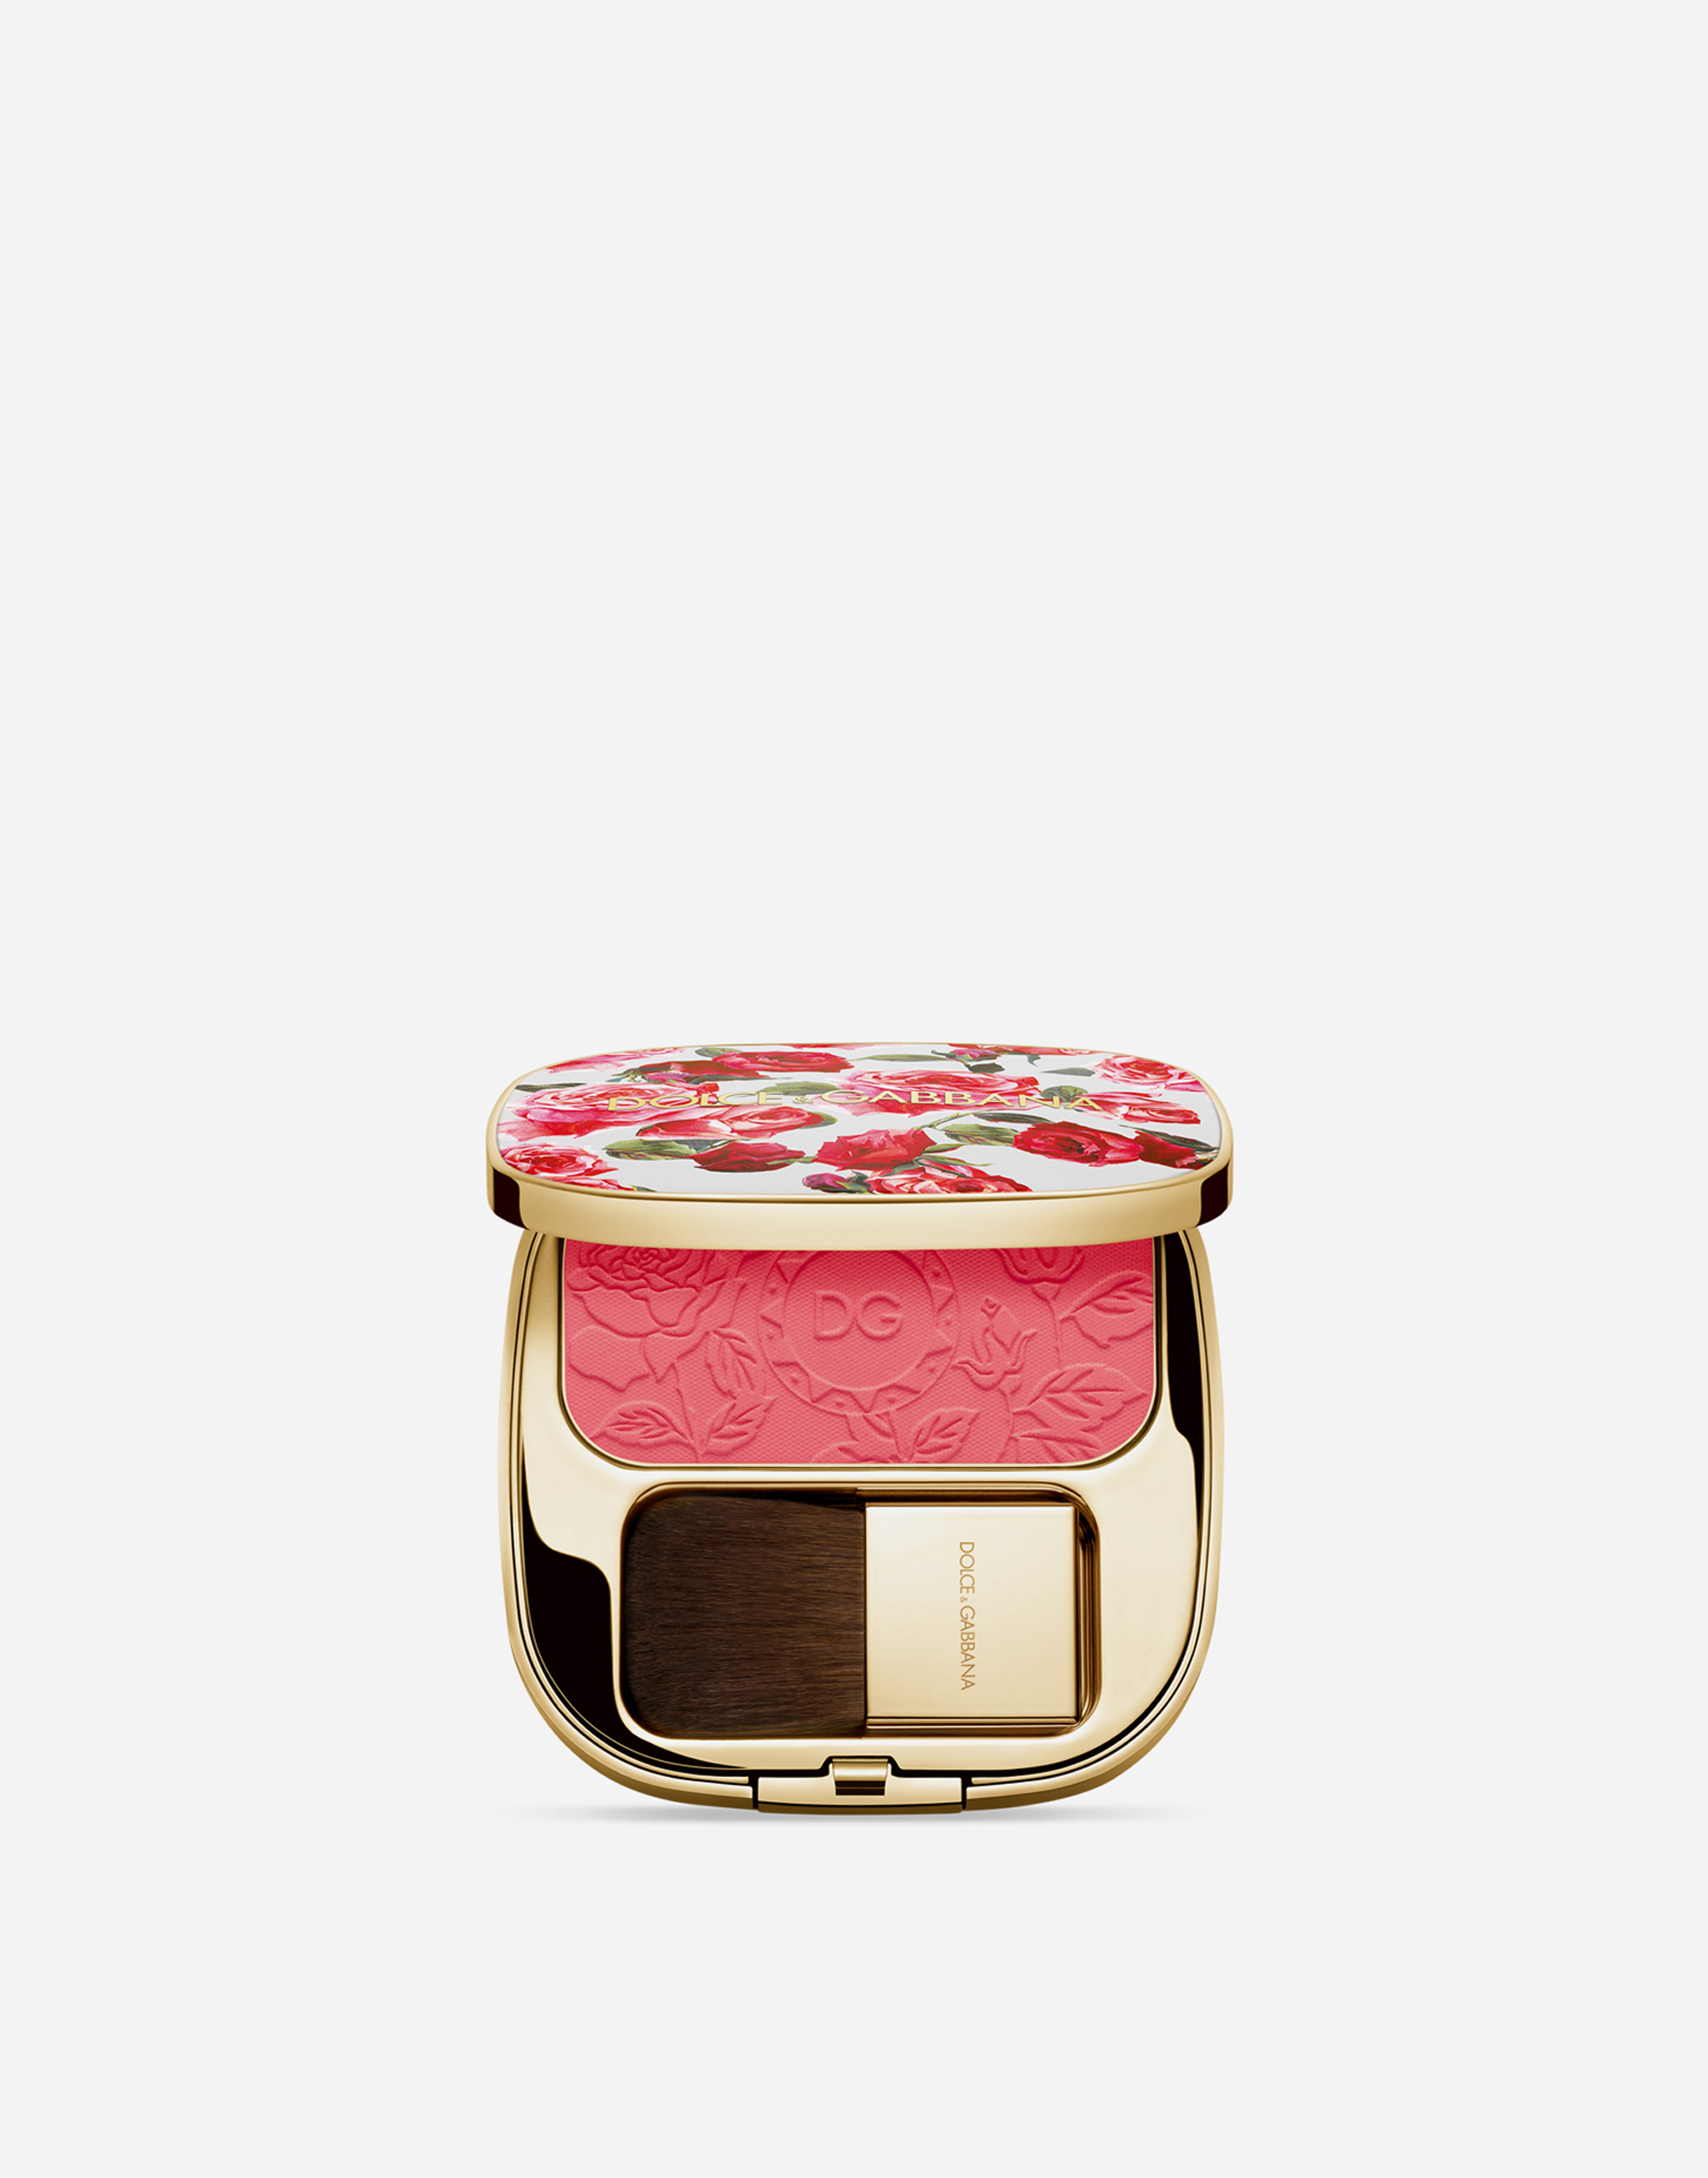 Dolce & Gabbana Blush Of Roses In Pinkpop 210